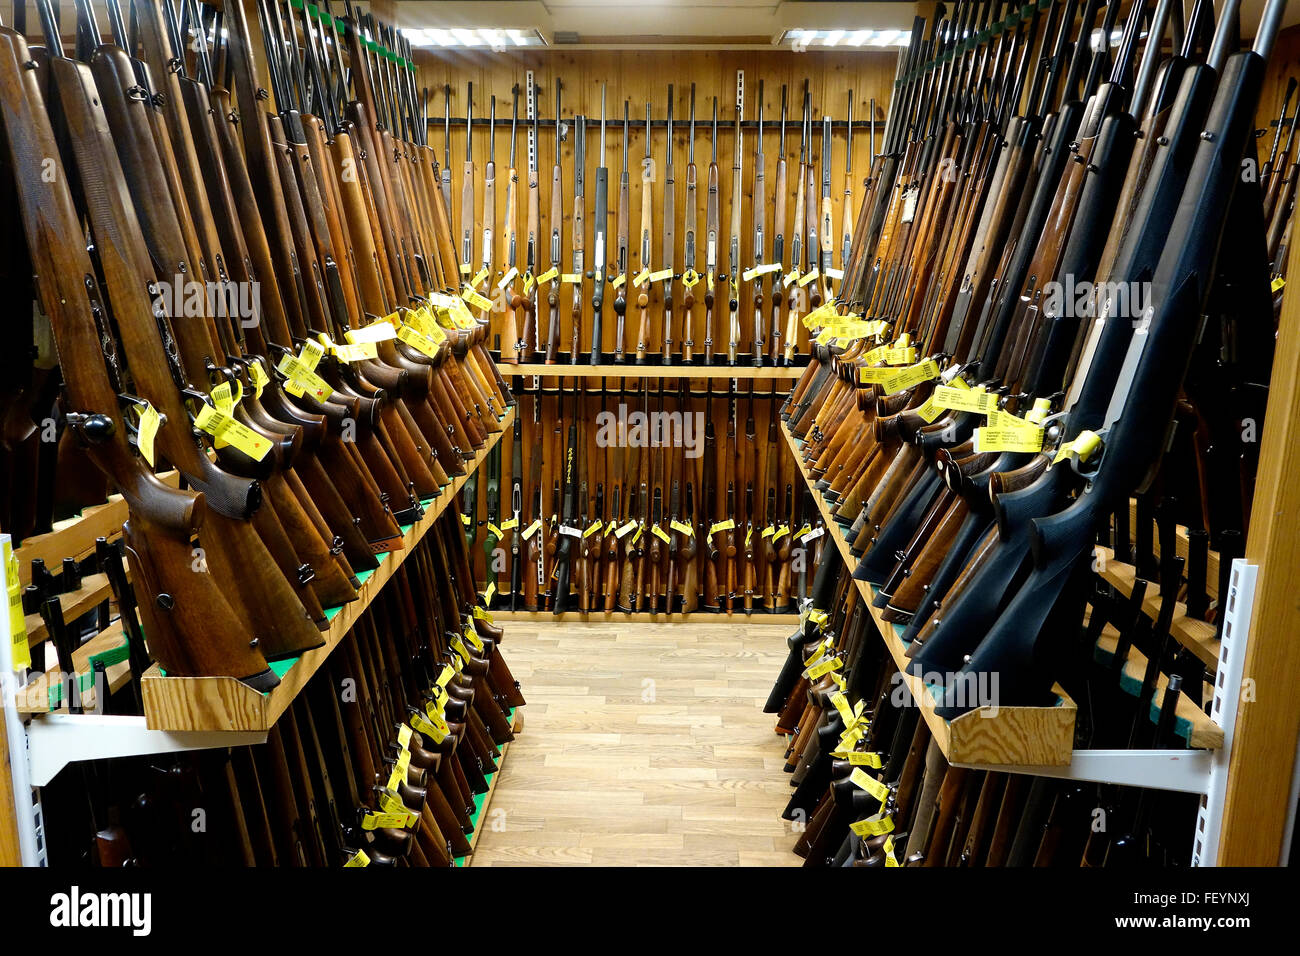 Rifles on display at a gun shop Stock Photo